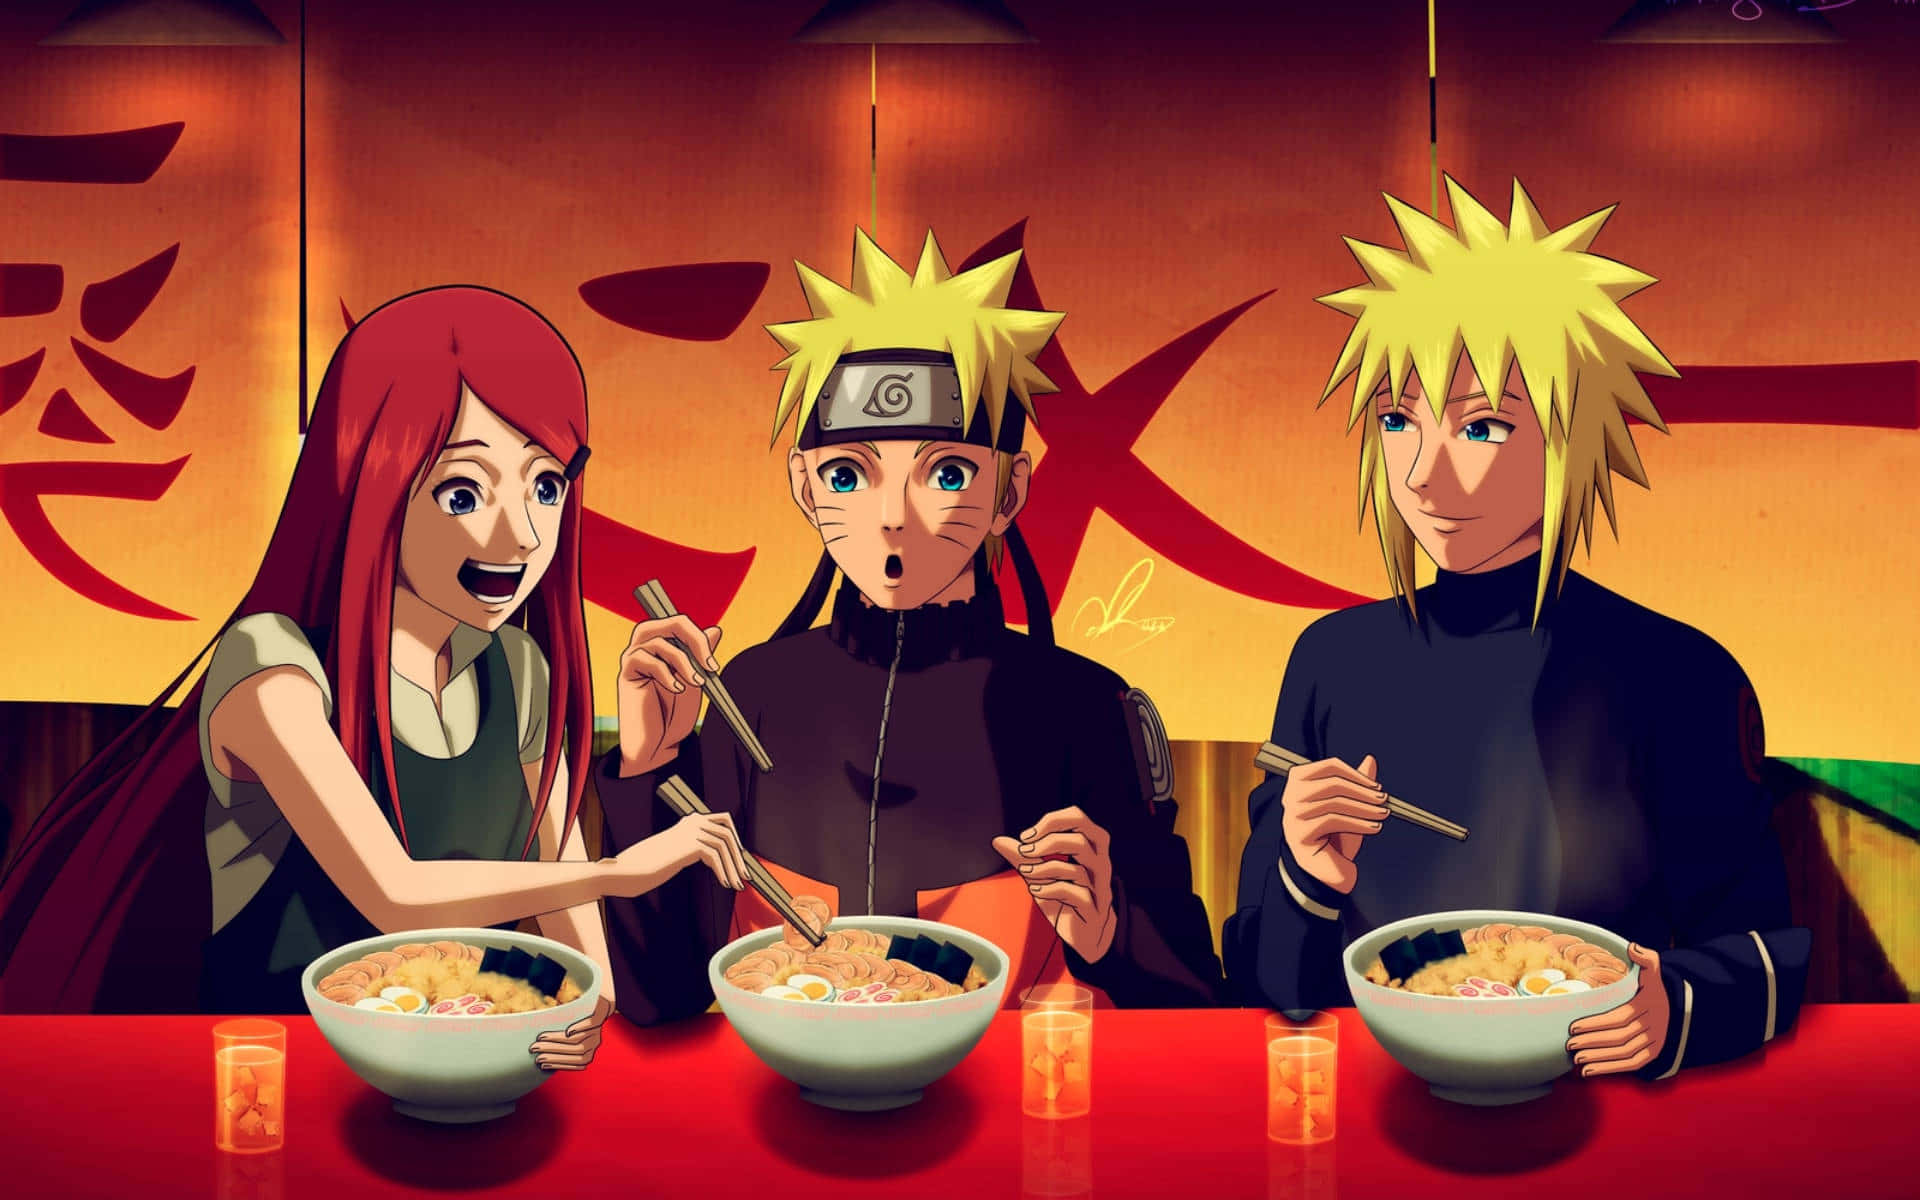 Stickers Goku & Naruto Eating Ramen Noodles Sticker Set Anime | eBay